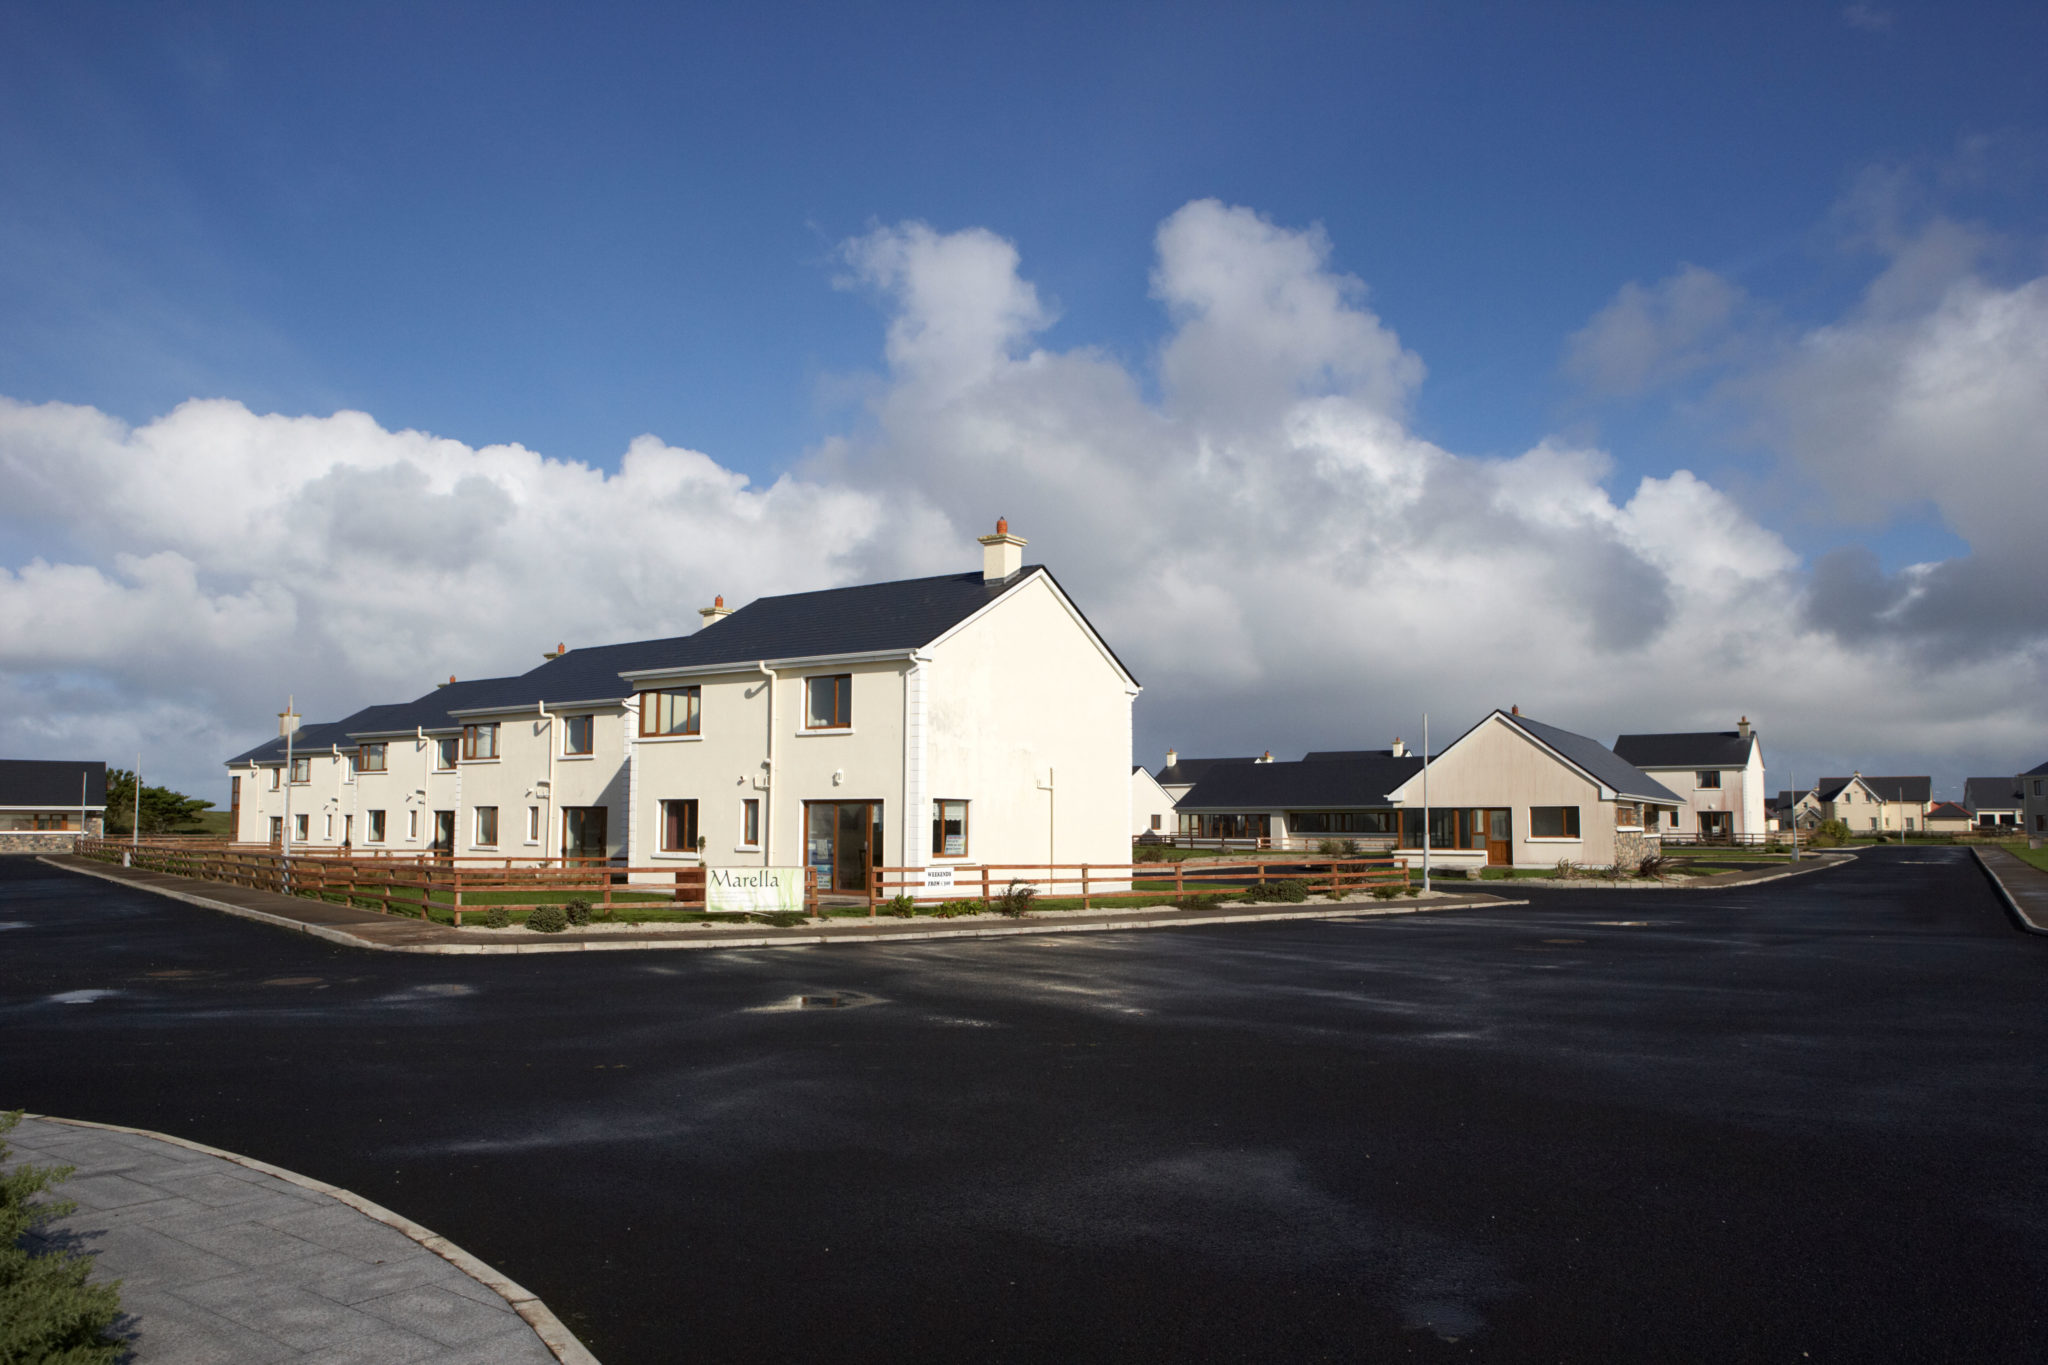 An estate of holiday homes in Enniscrone, Co Sligo in October 2011.